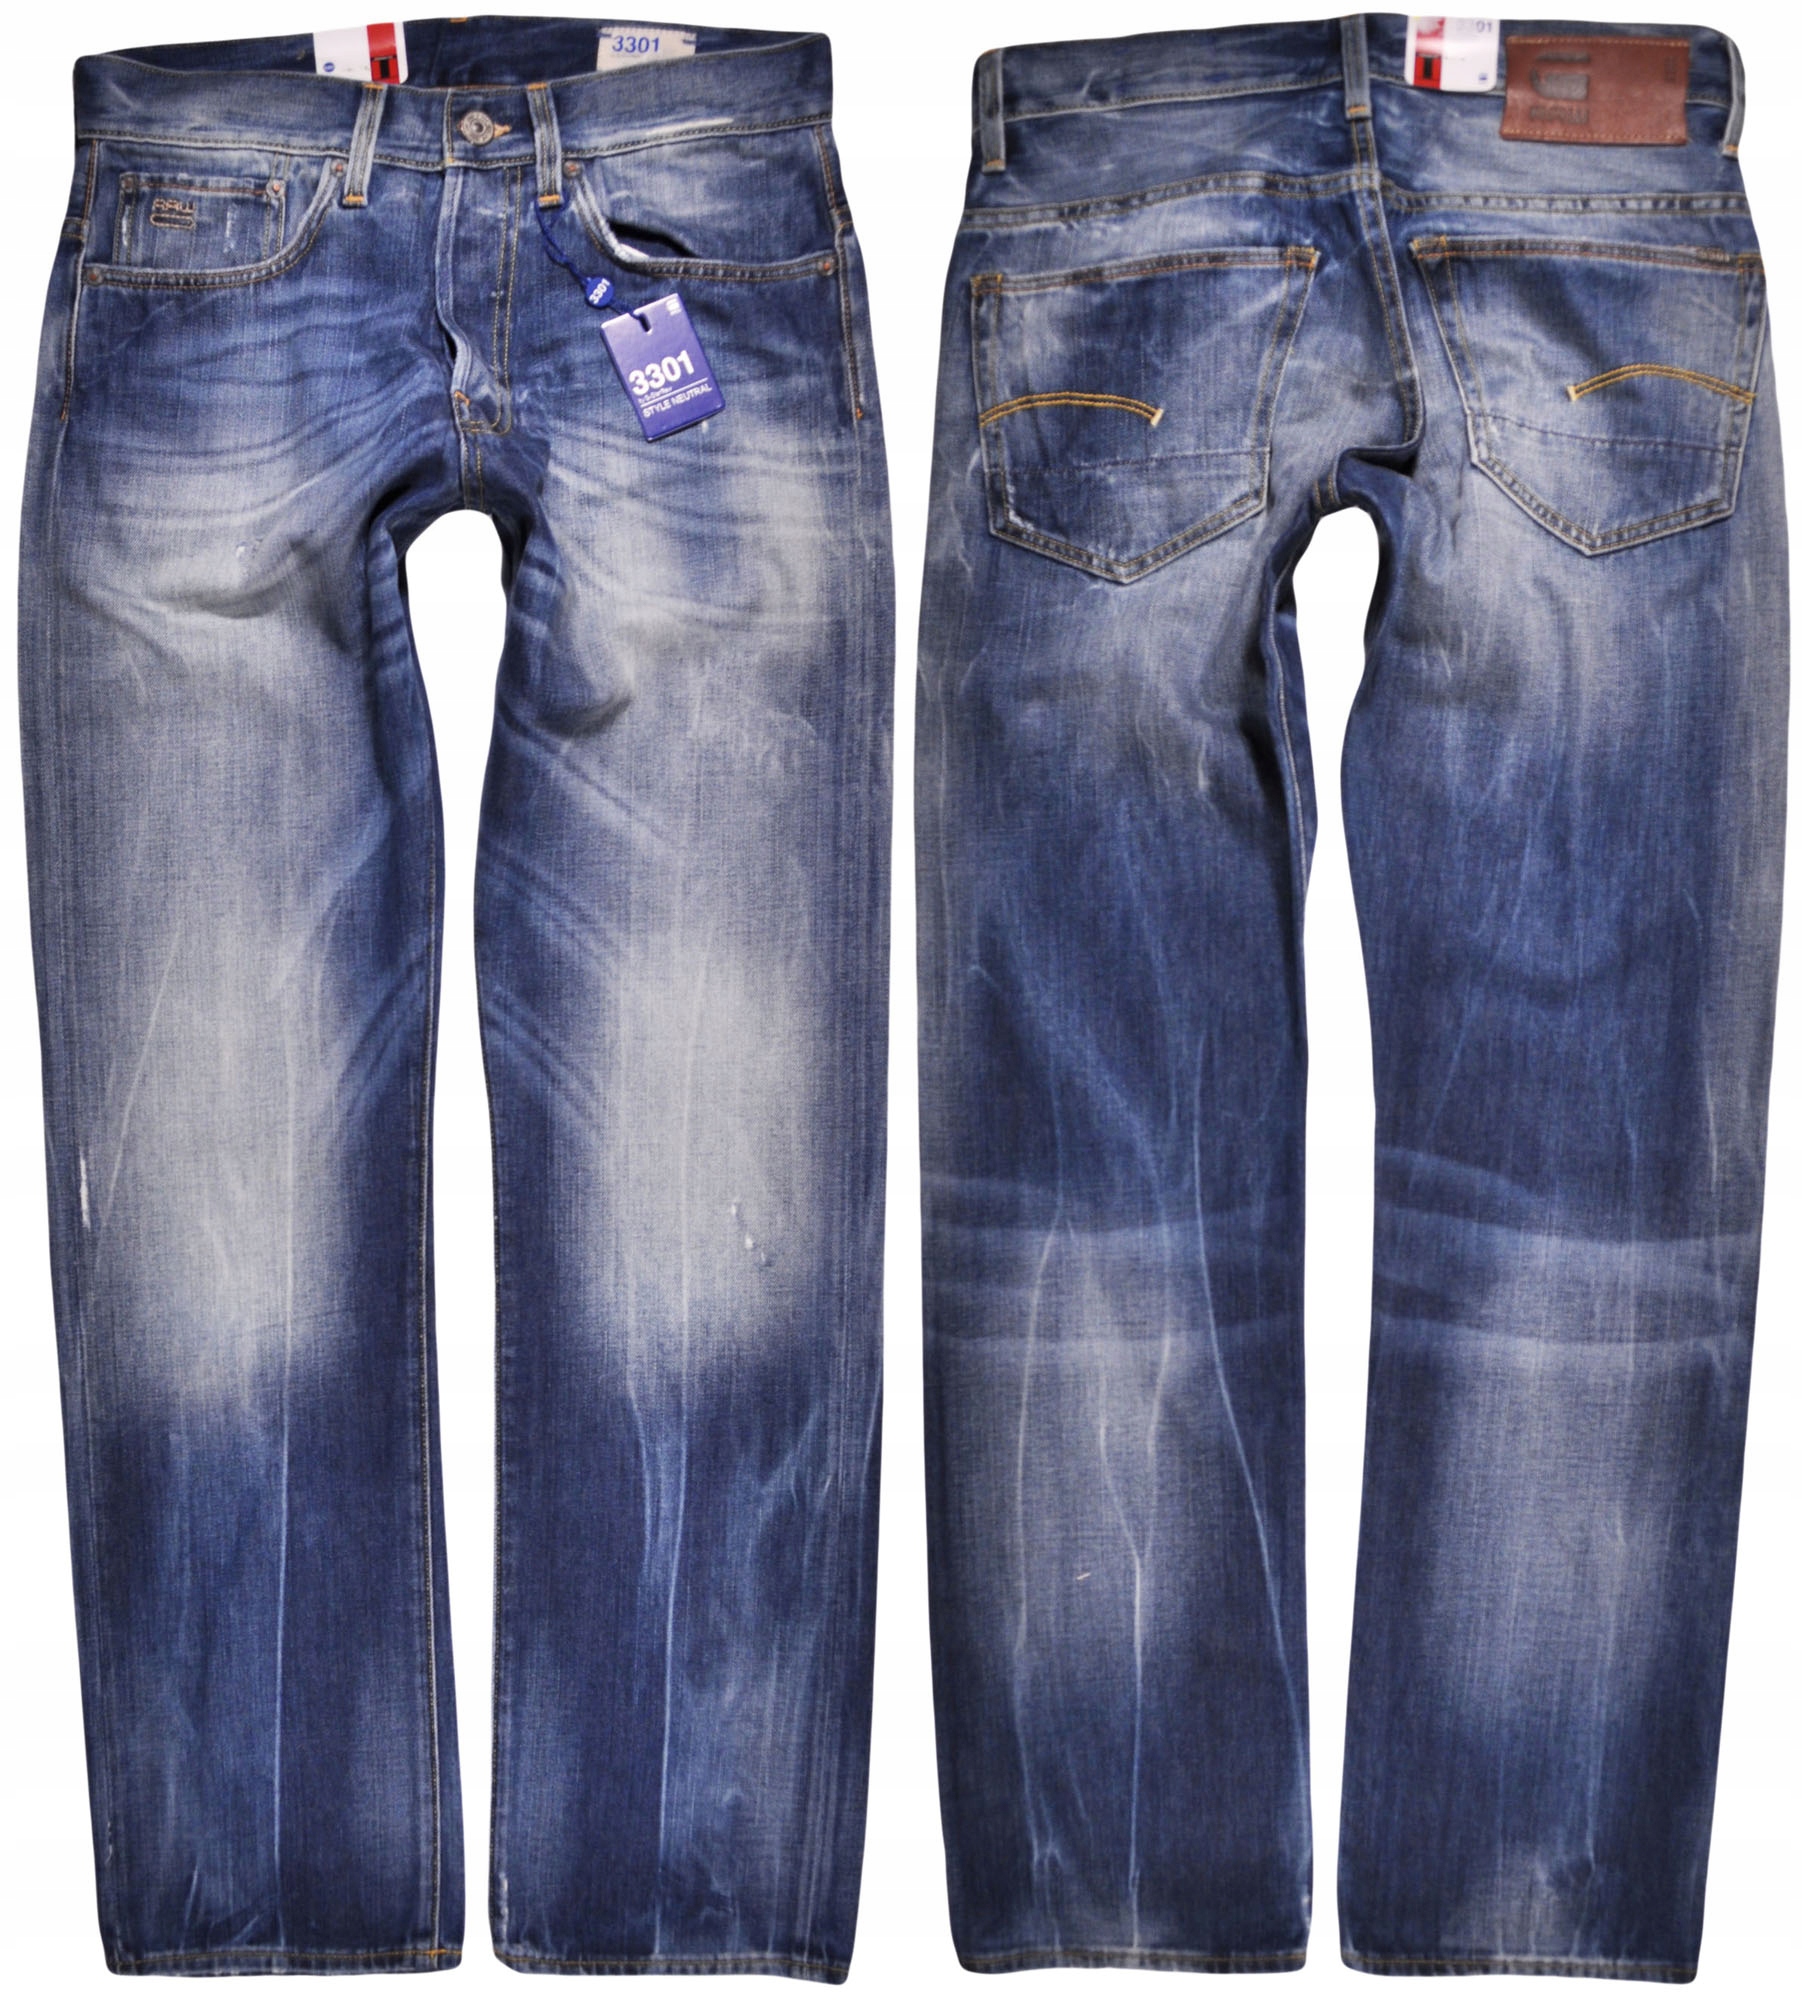 G-STAR RAW nohavice REGULAR blue jeans 3301 STRAIGHT _ W32 L32